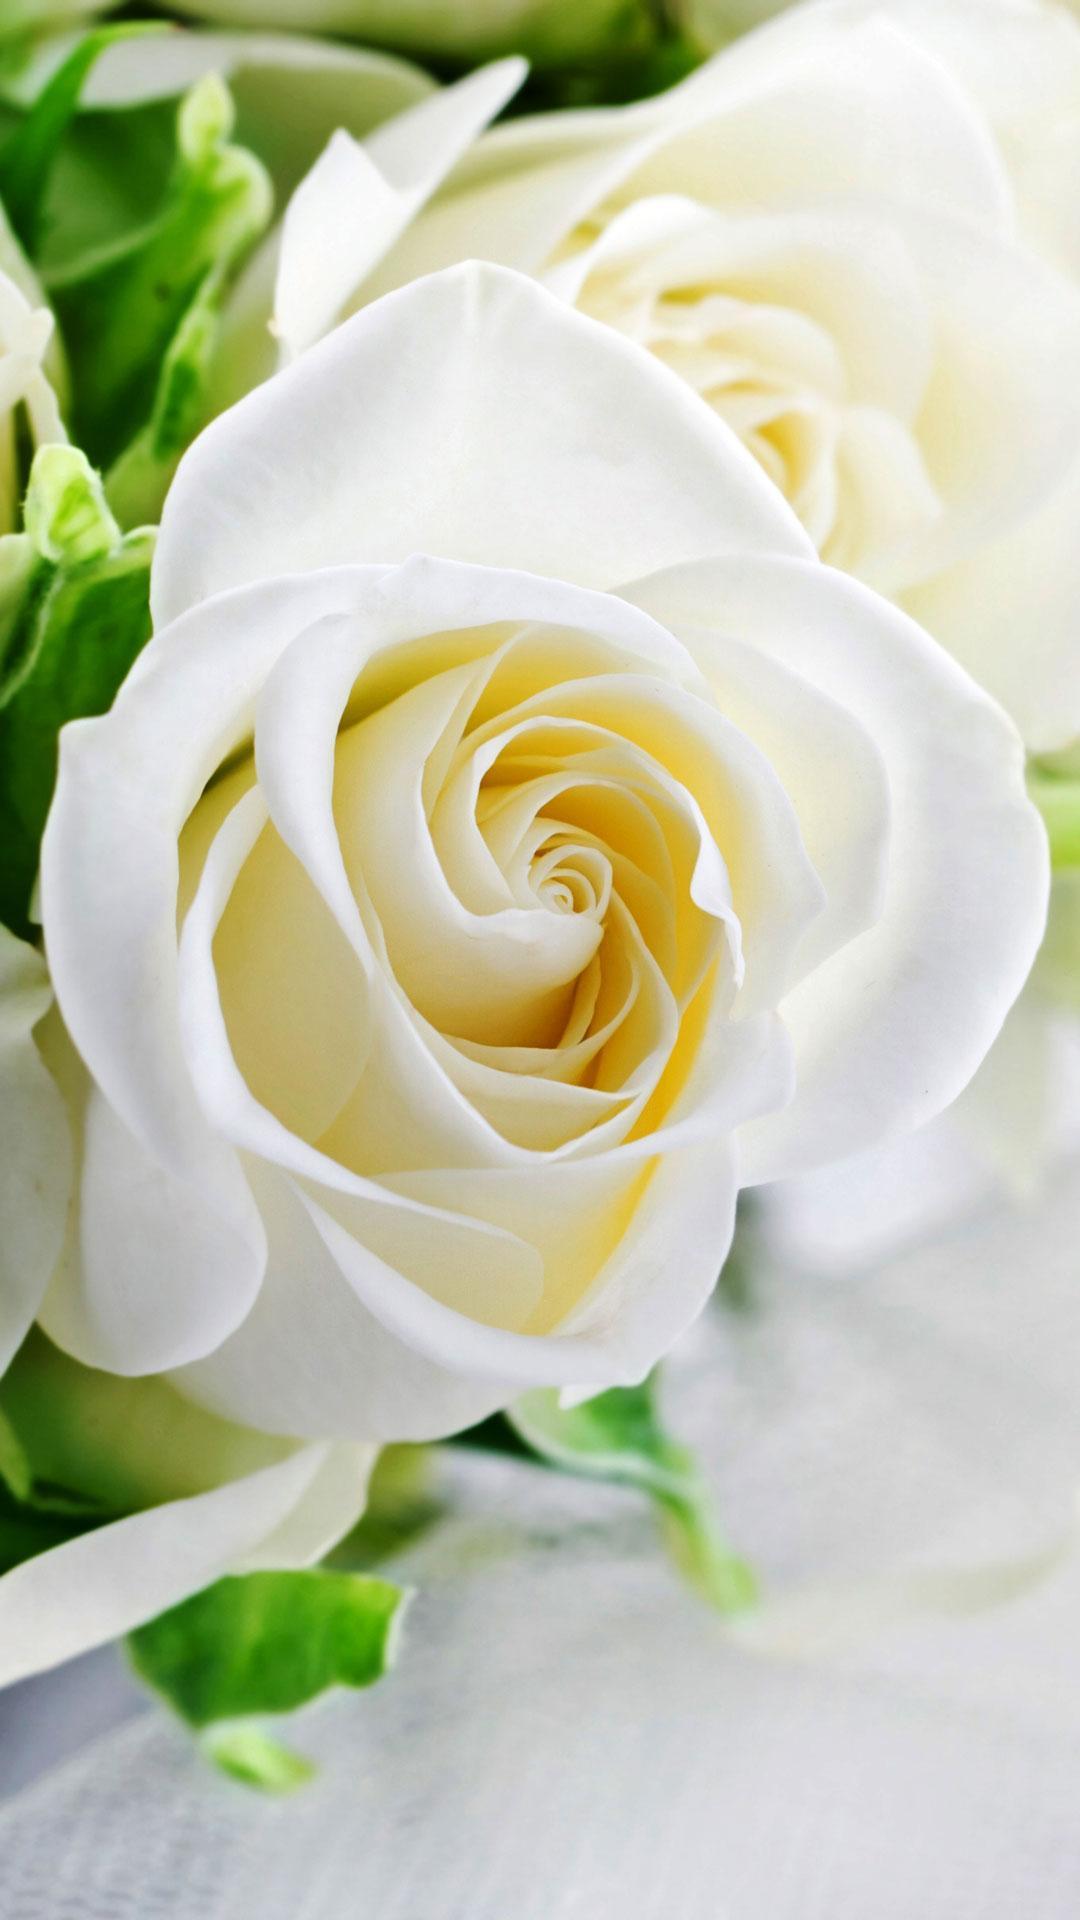 Lifeofanut: اجمل وردة بيضاء بالعالم